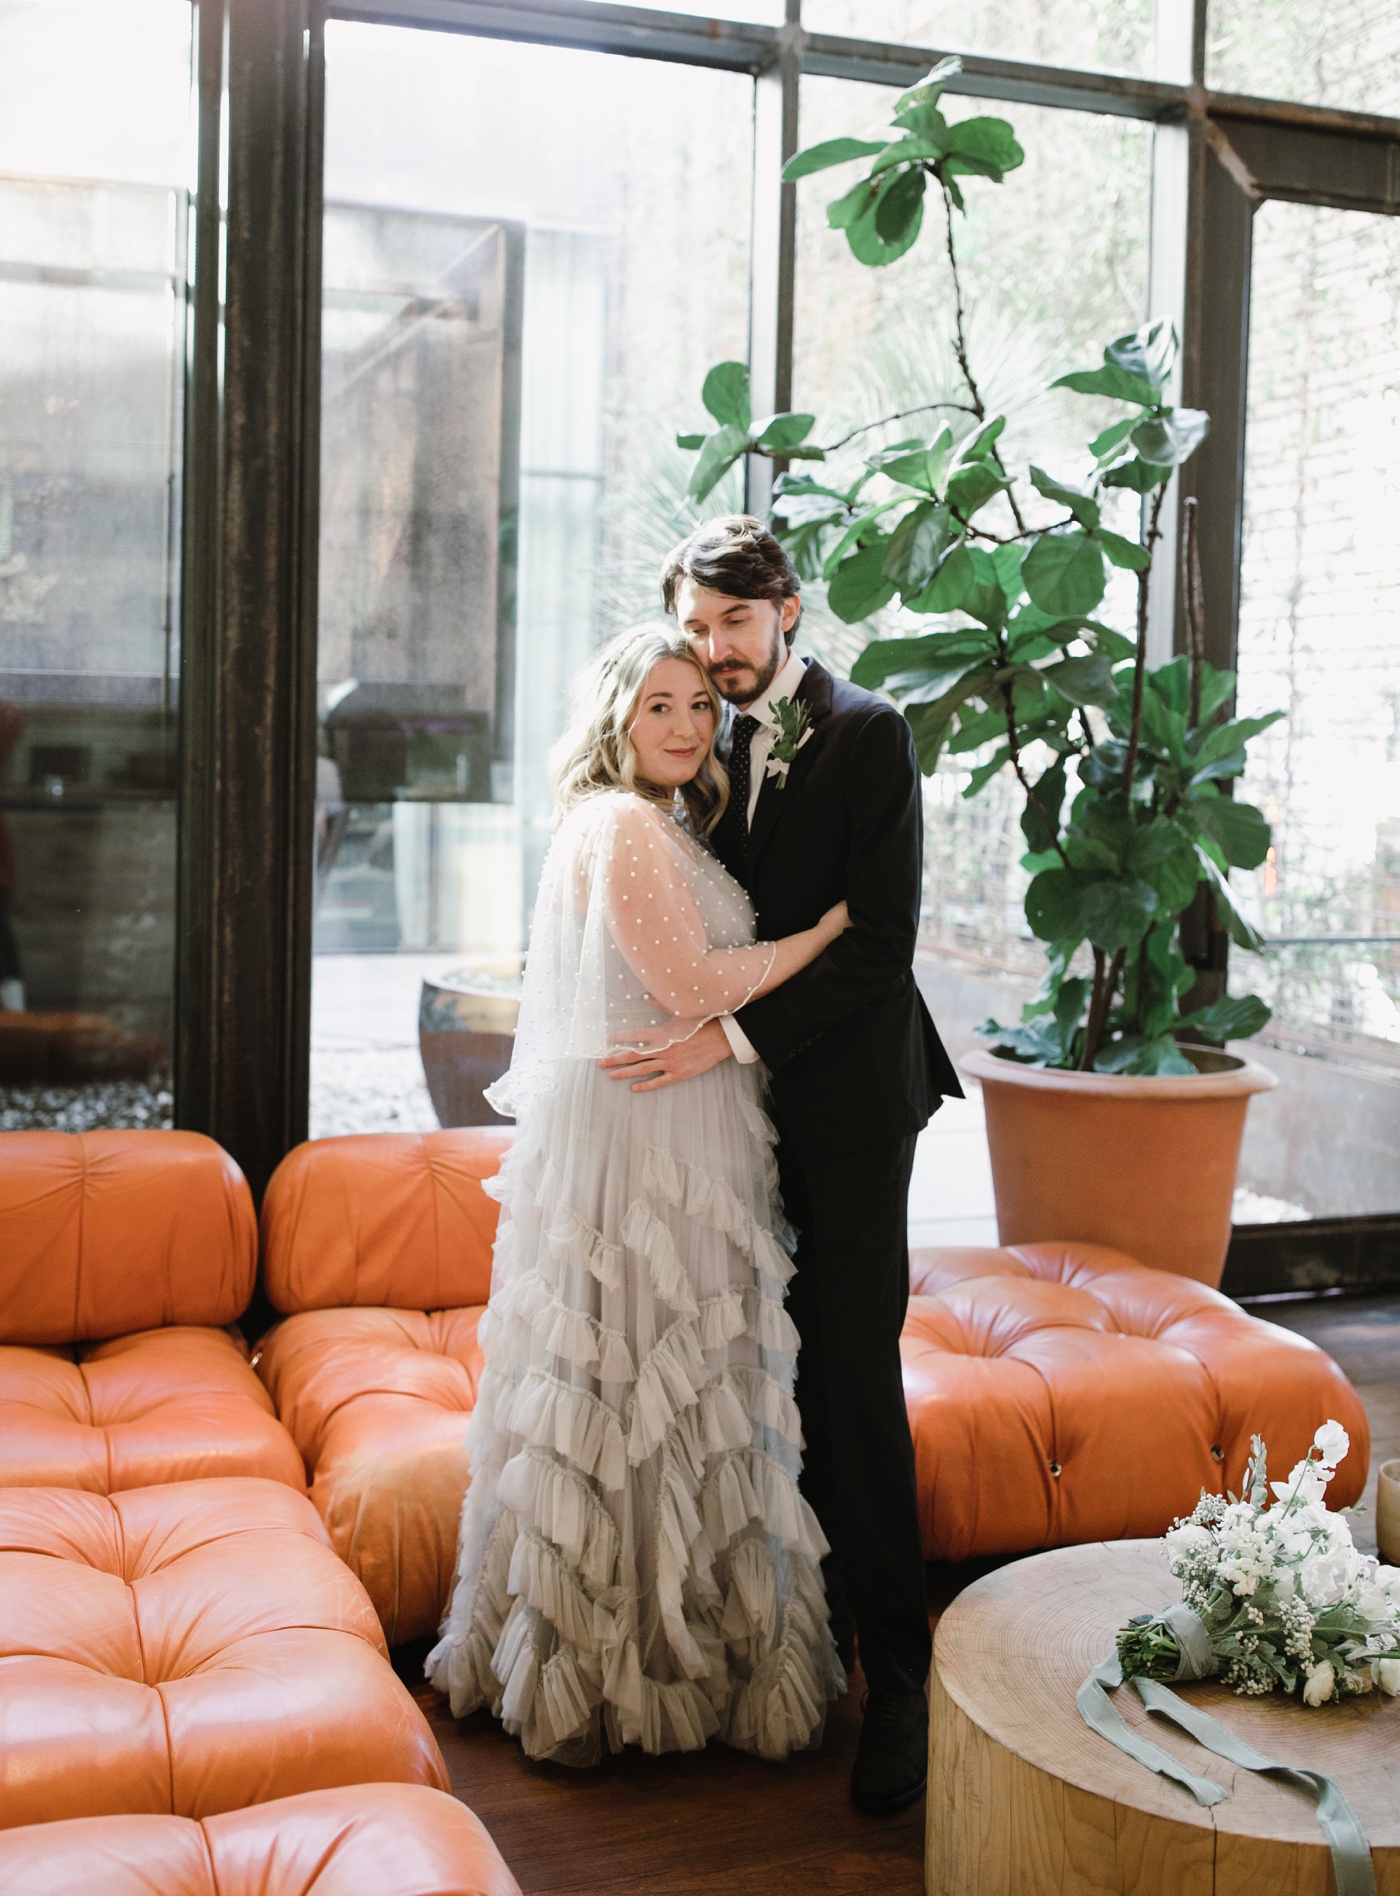 An Austin wedding photographer discusses her favorite Austin wedding venue